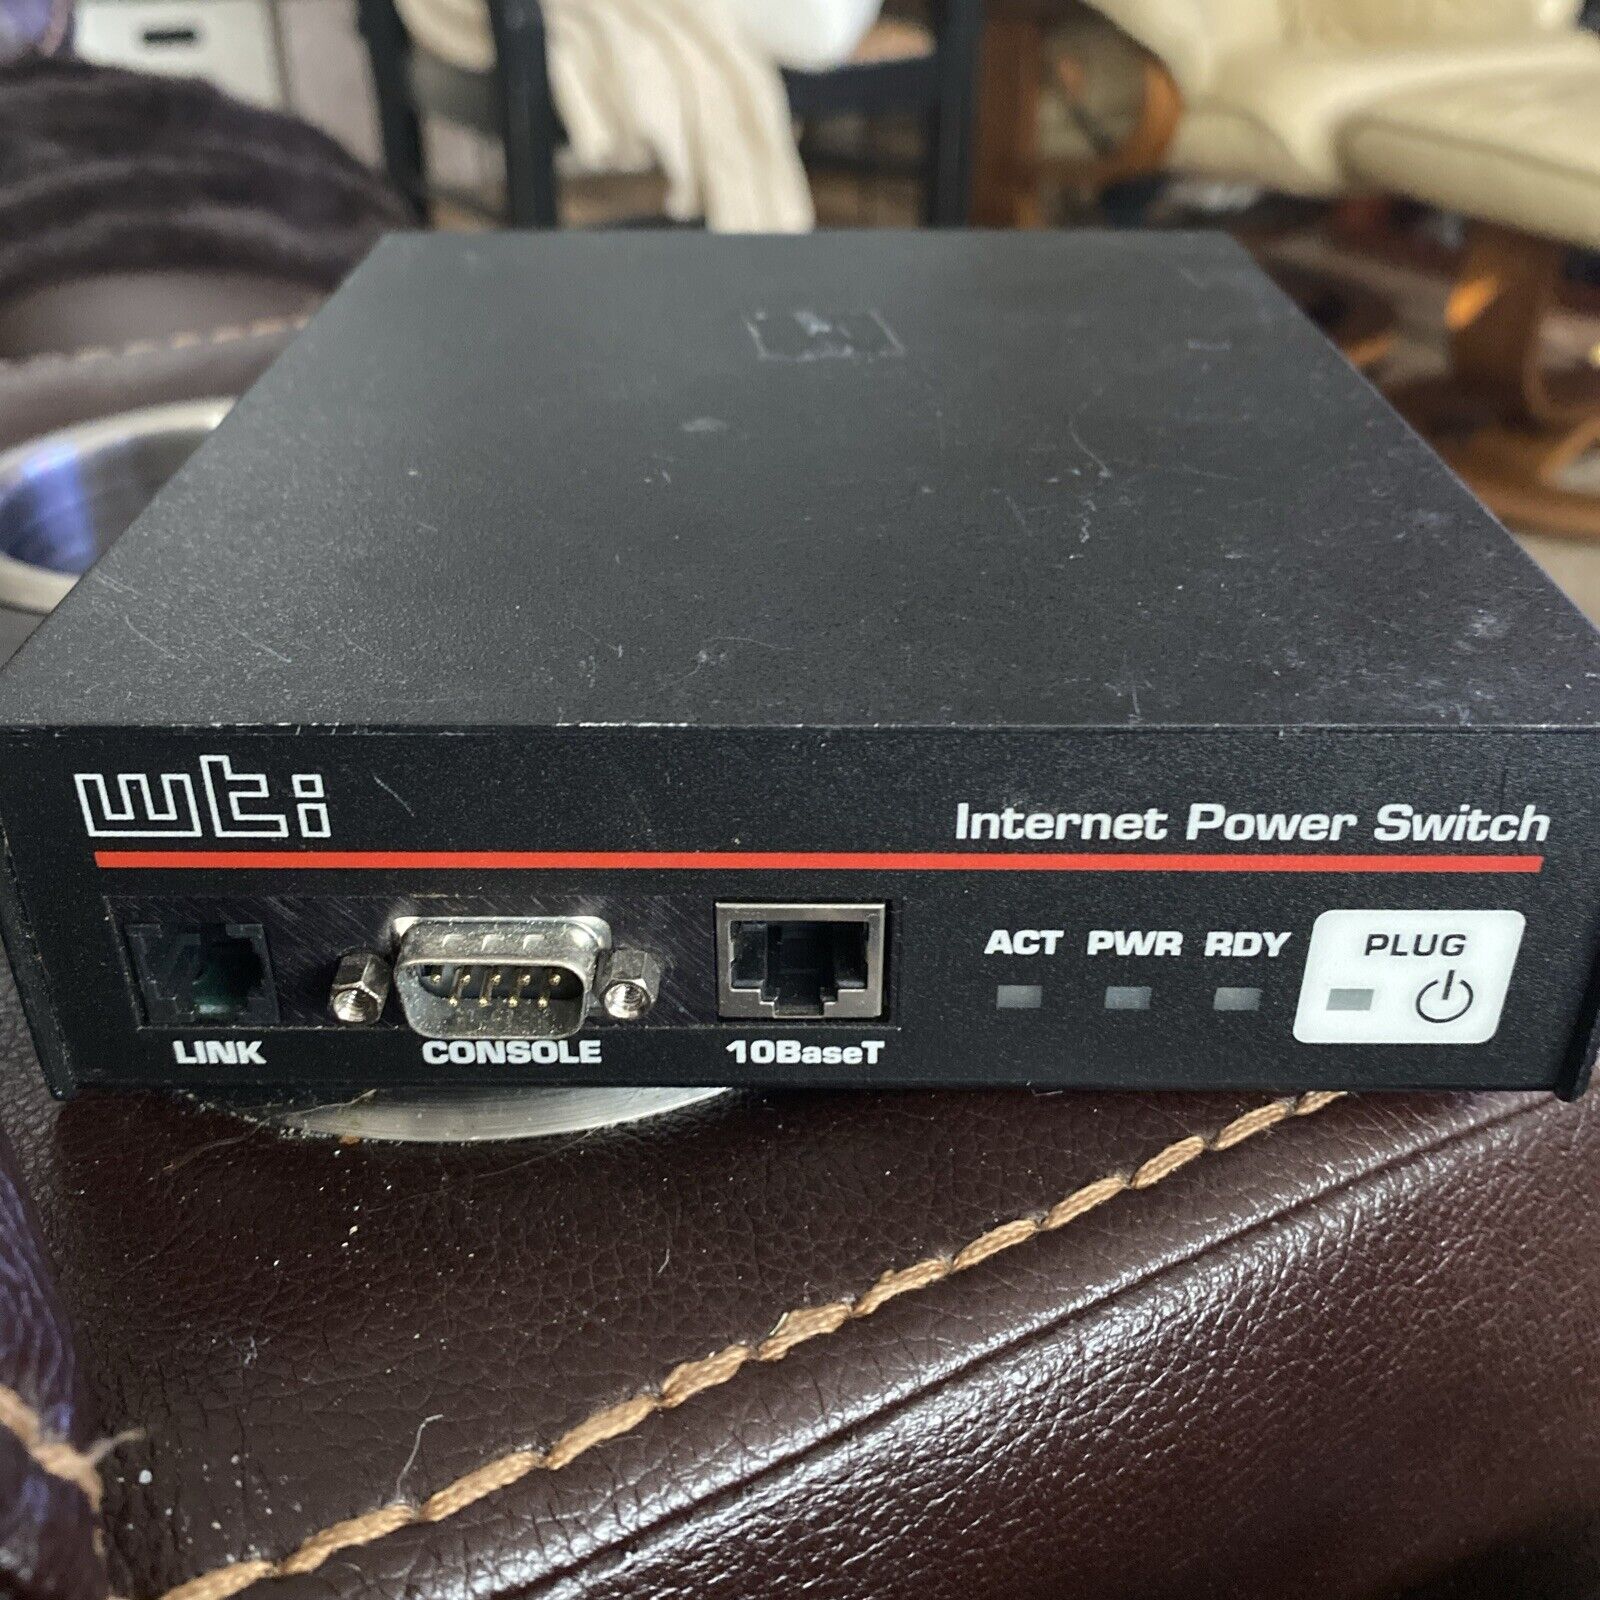 WTI IPS-15 Internet Power Switch Western Telematic 115vac IPS-15